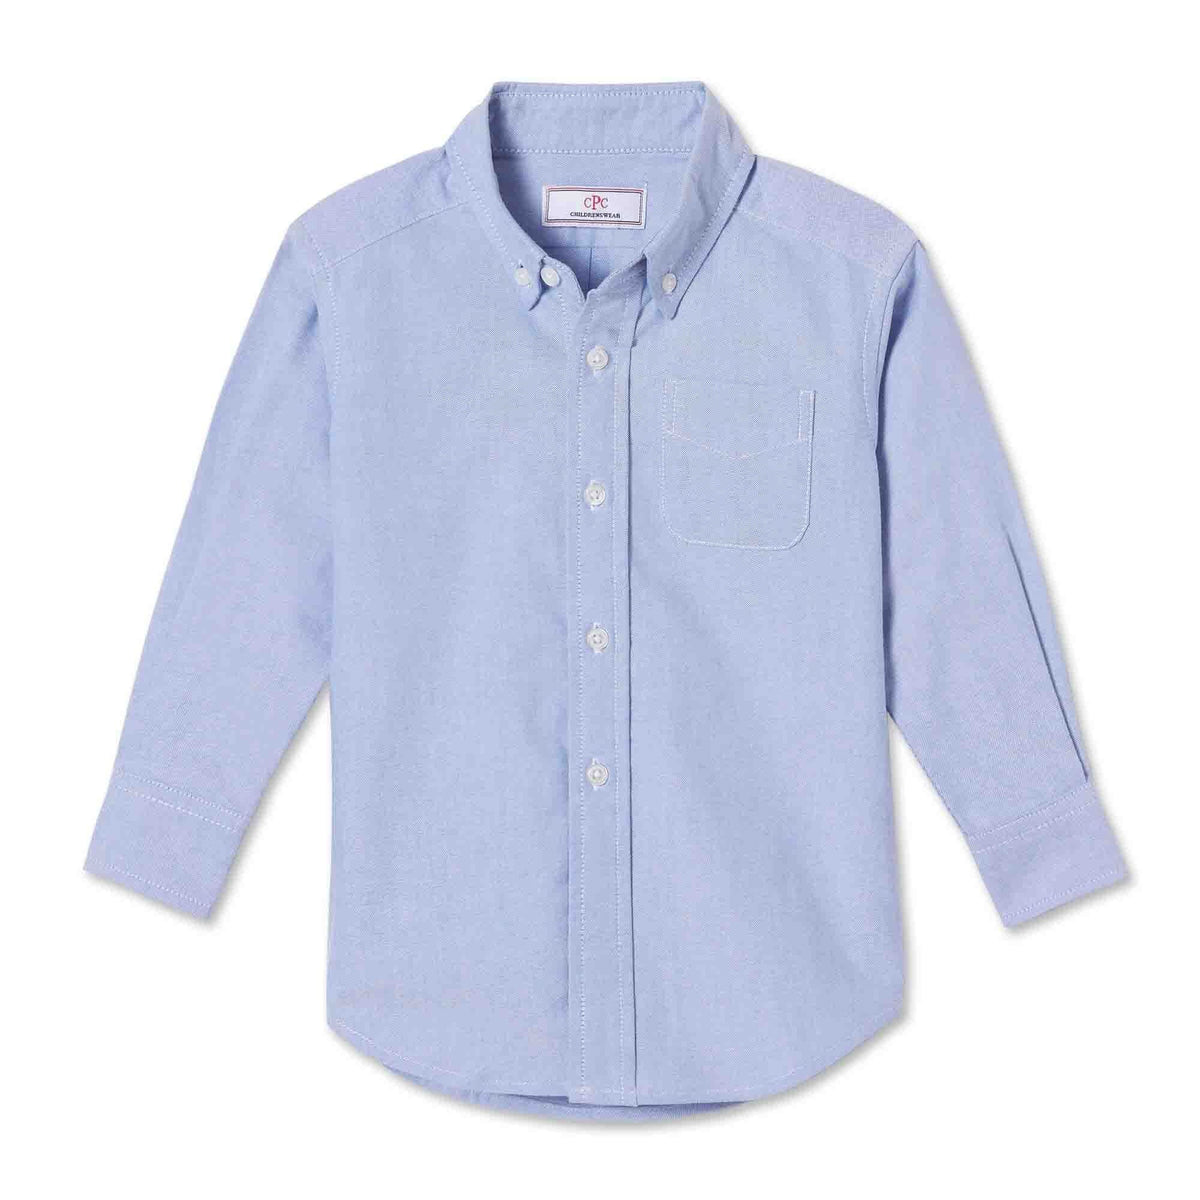 Classic and Preppy Owen Buttondown, Nantucket Breeze Oxford-Shirts and Tops-Nantucket Breeze-2T-CPC - Classic Prep Childrenswear